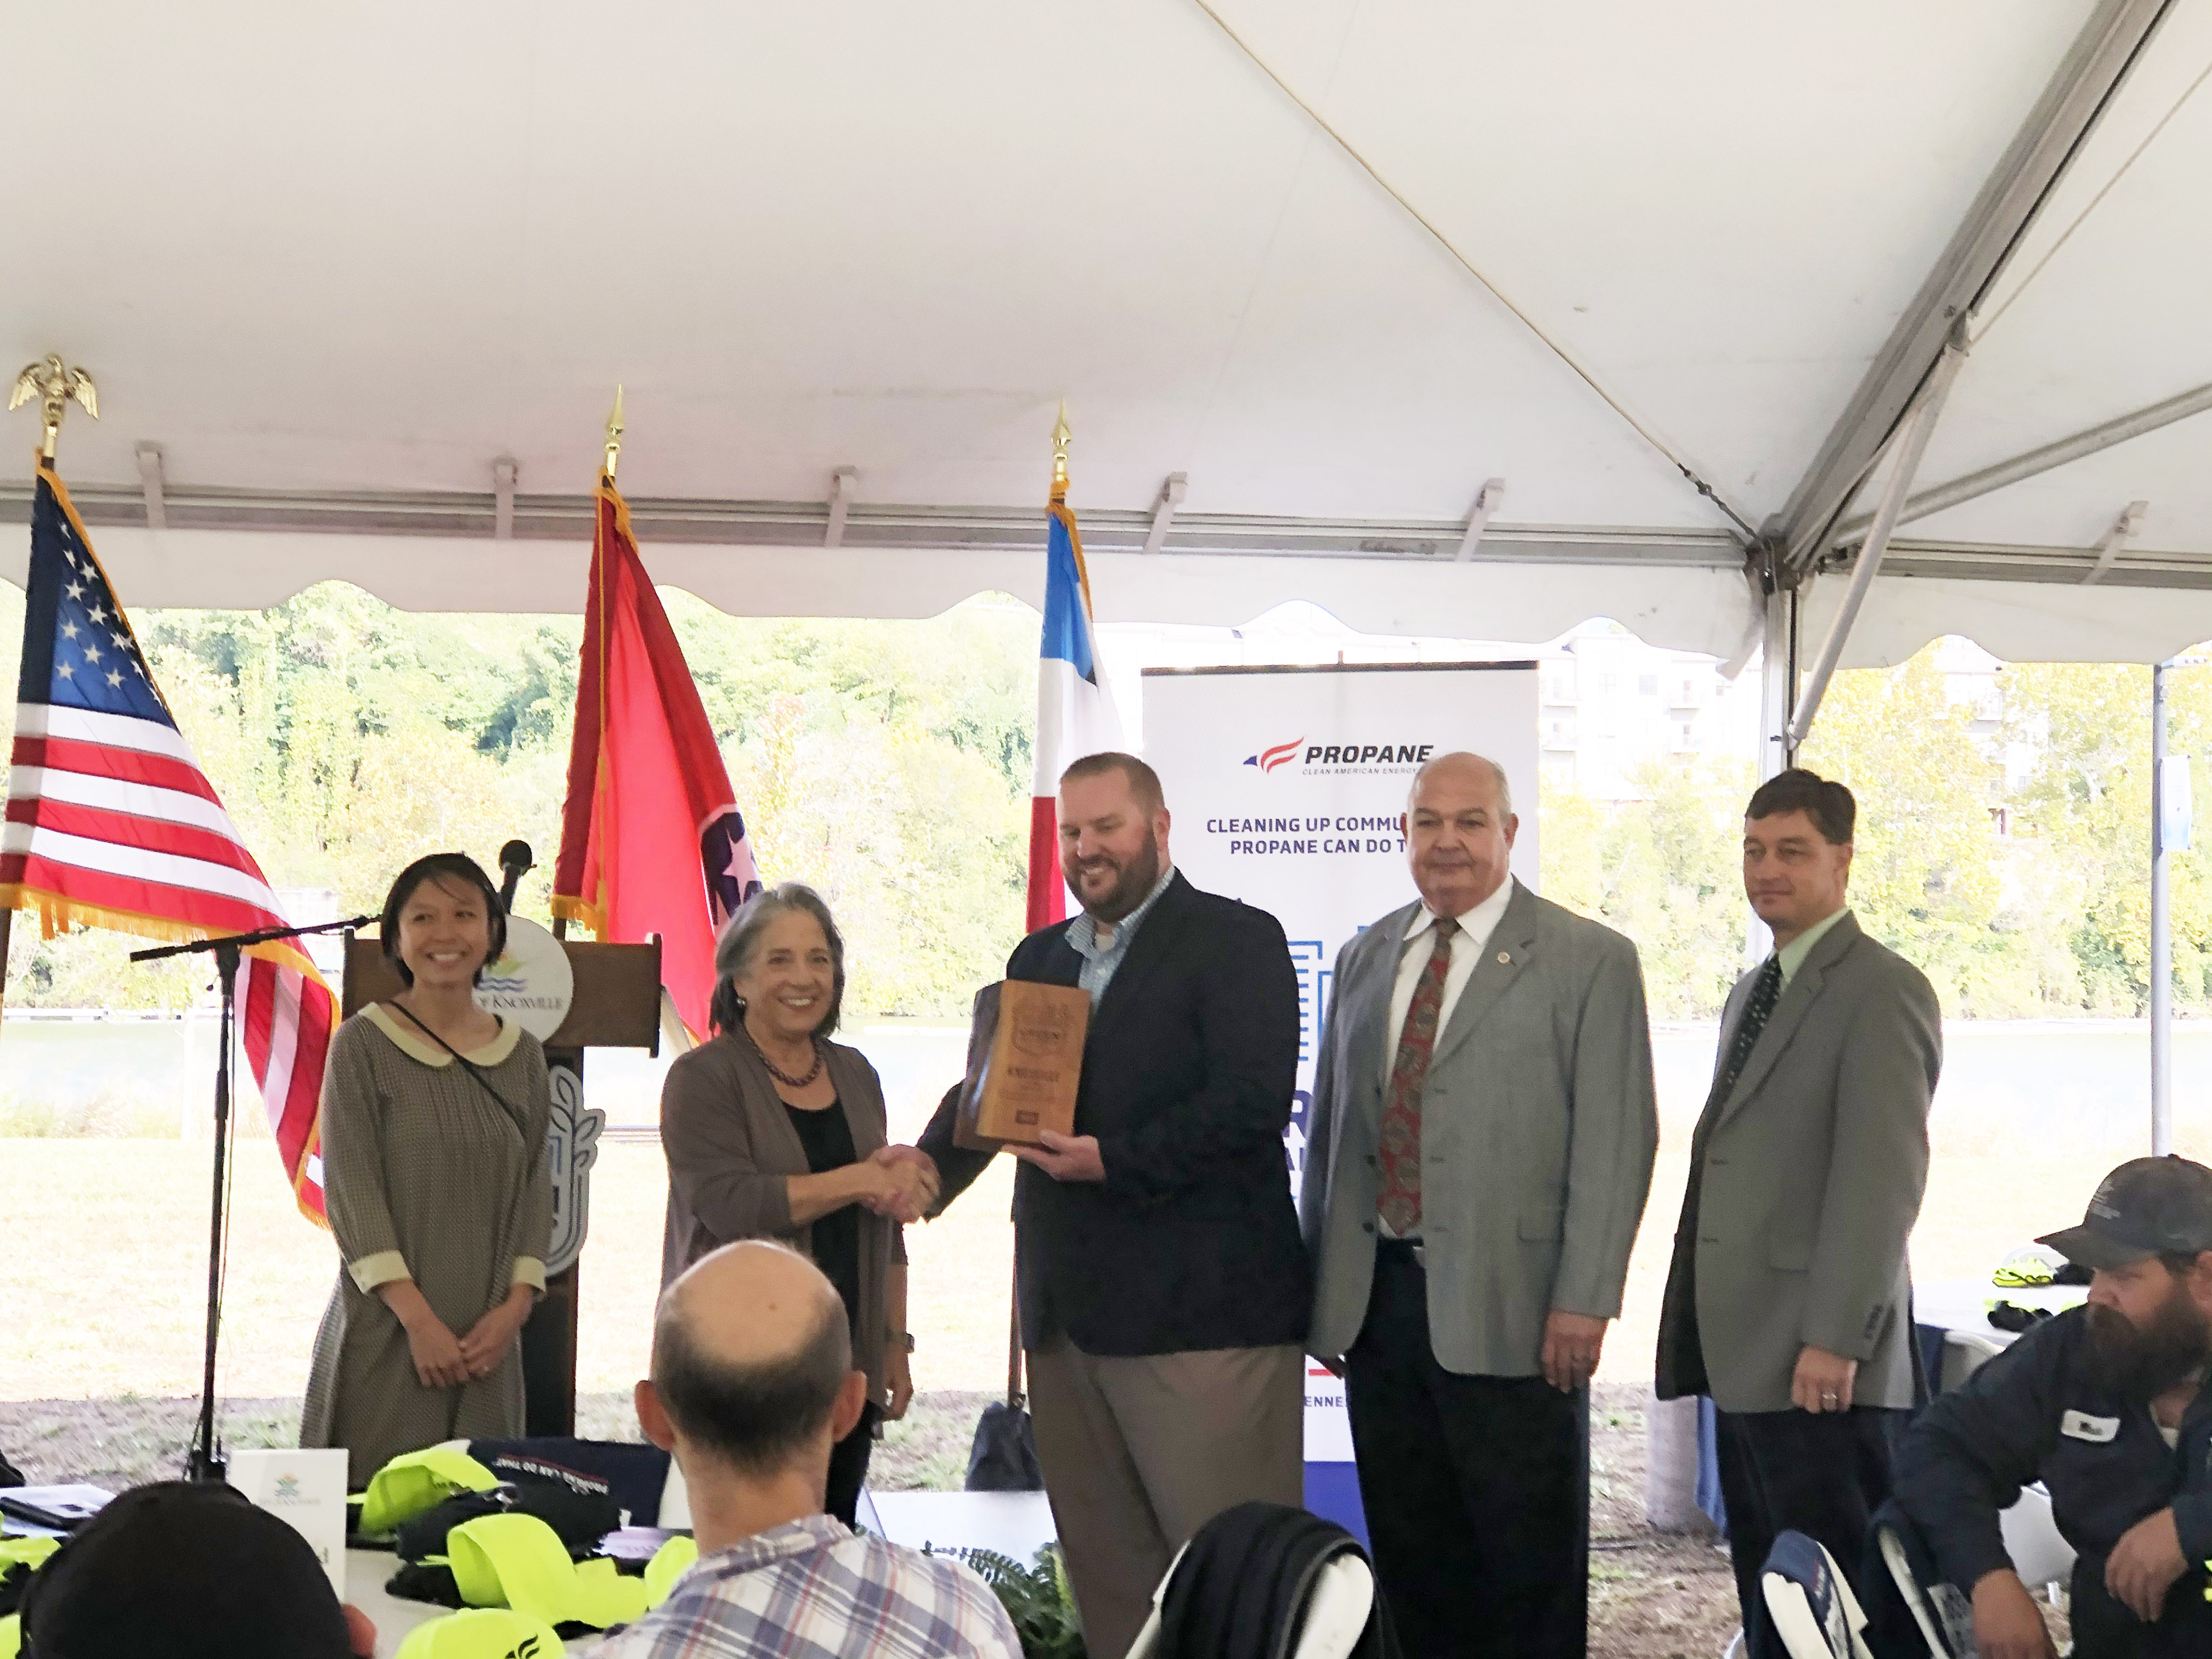 Propane Council Awards Knoxville Tenn Green Leadership Award Clean Propane Fleets Reduce pollution 96 percent reports BPN 10 2019